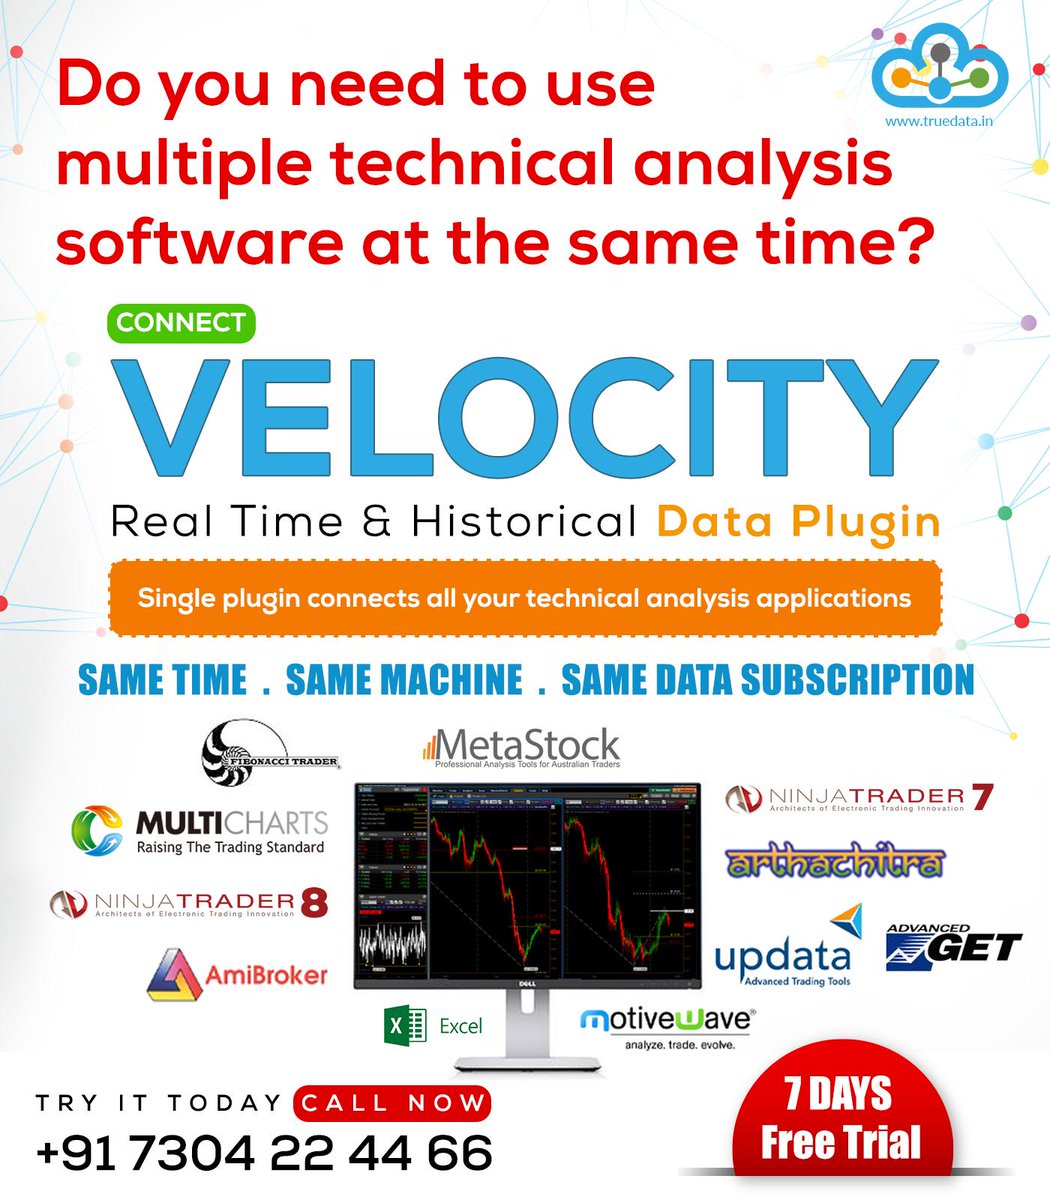 Metastock Charting Software